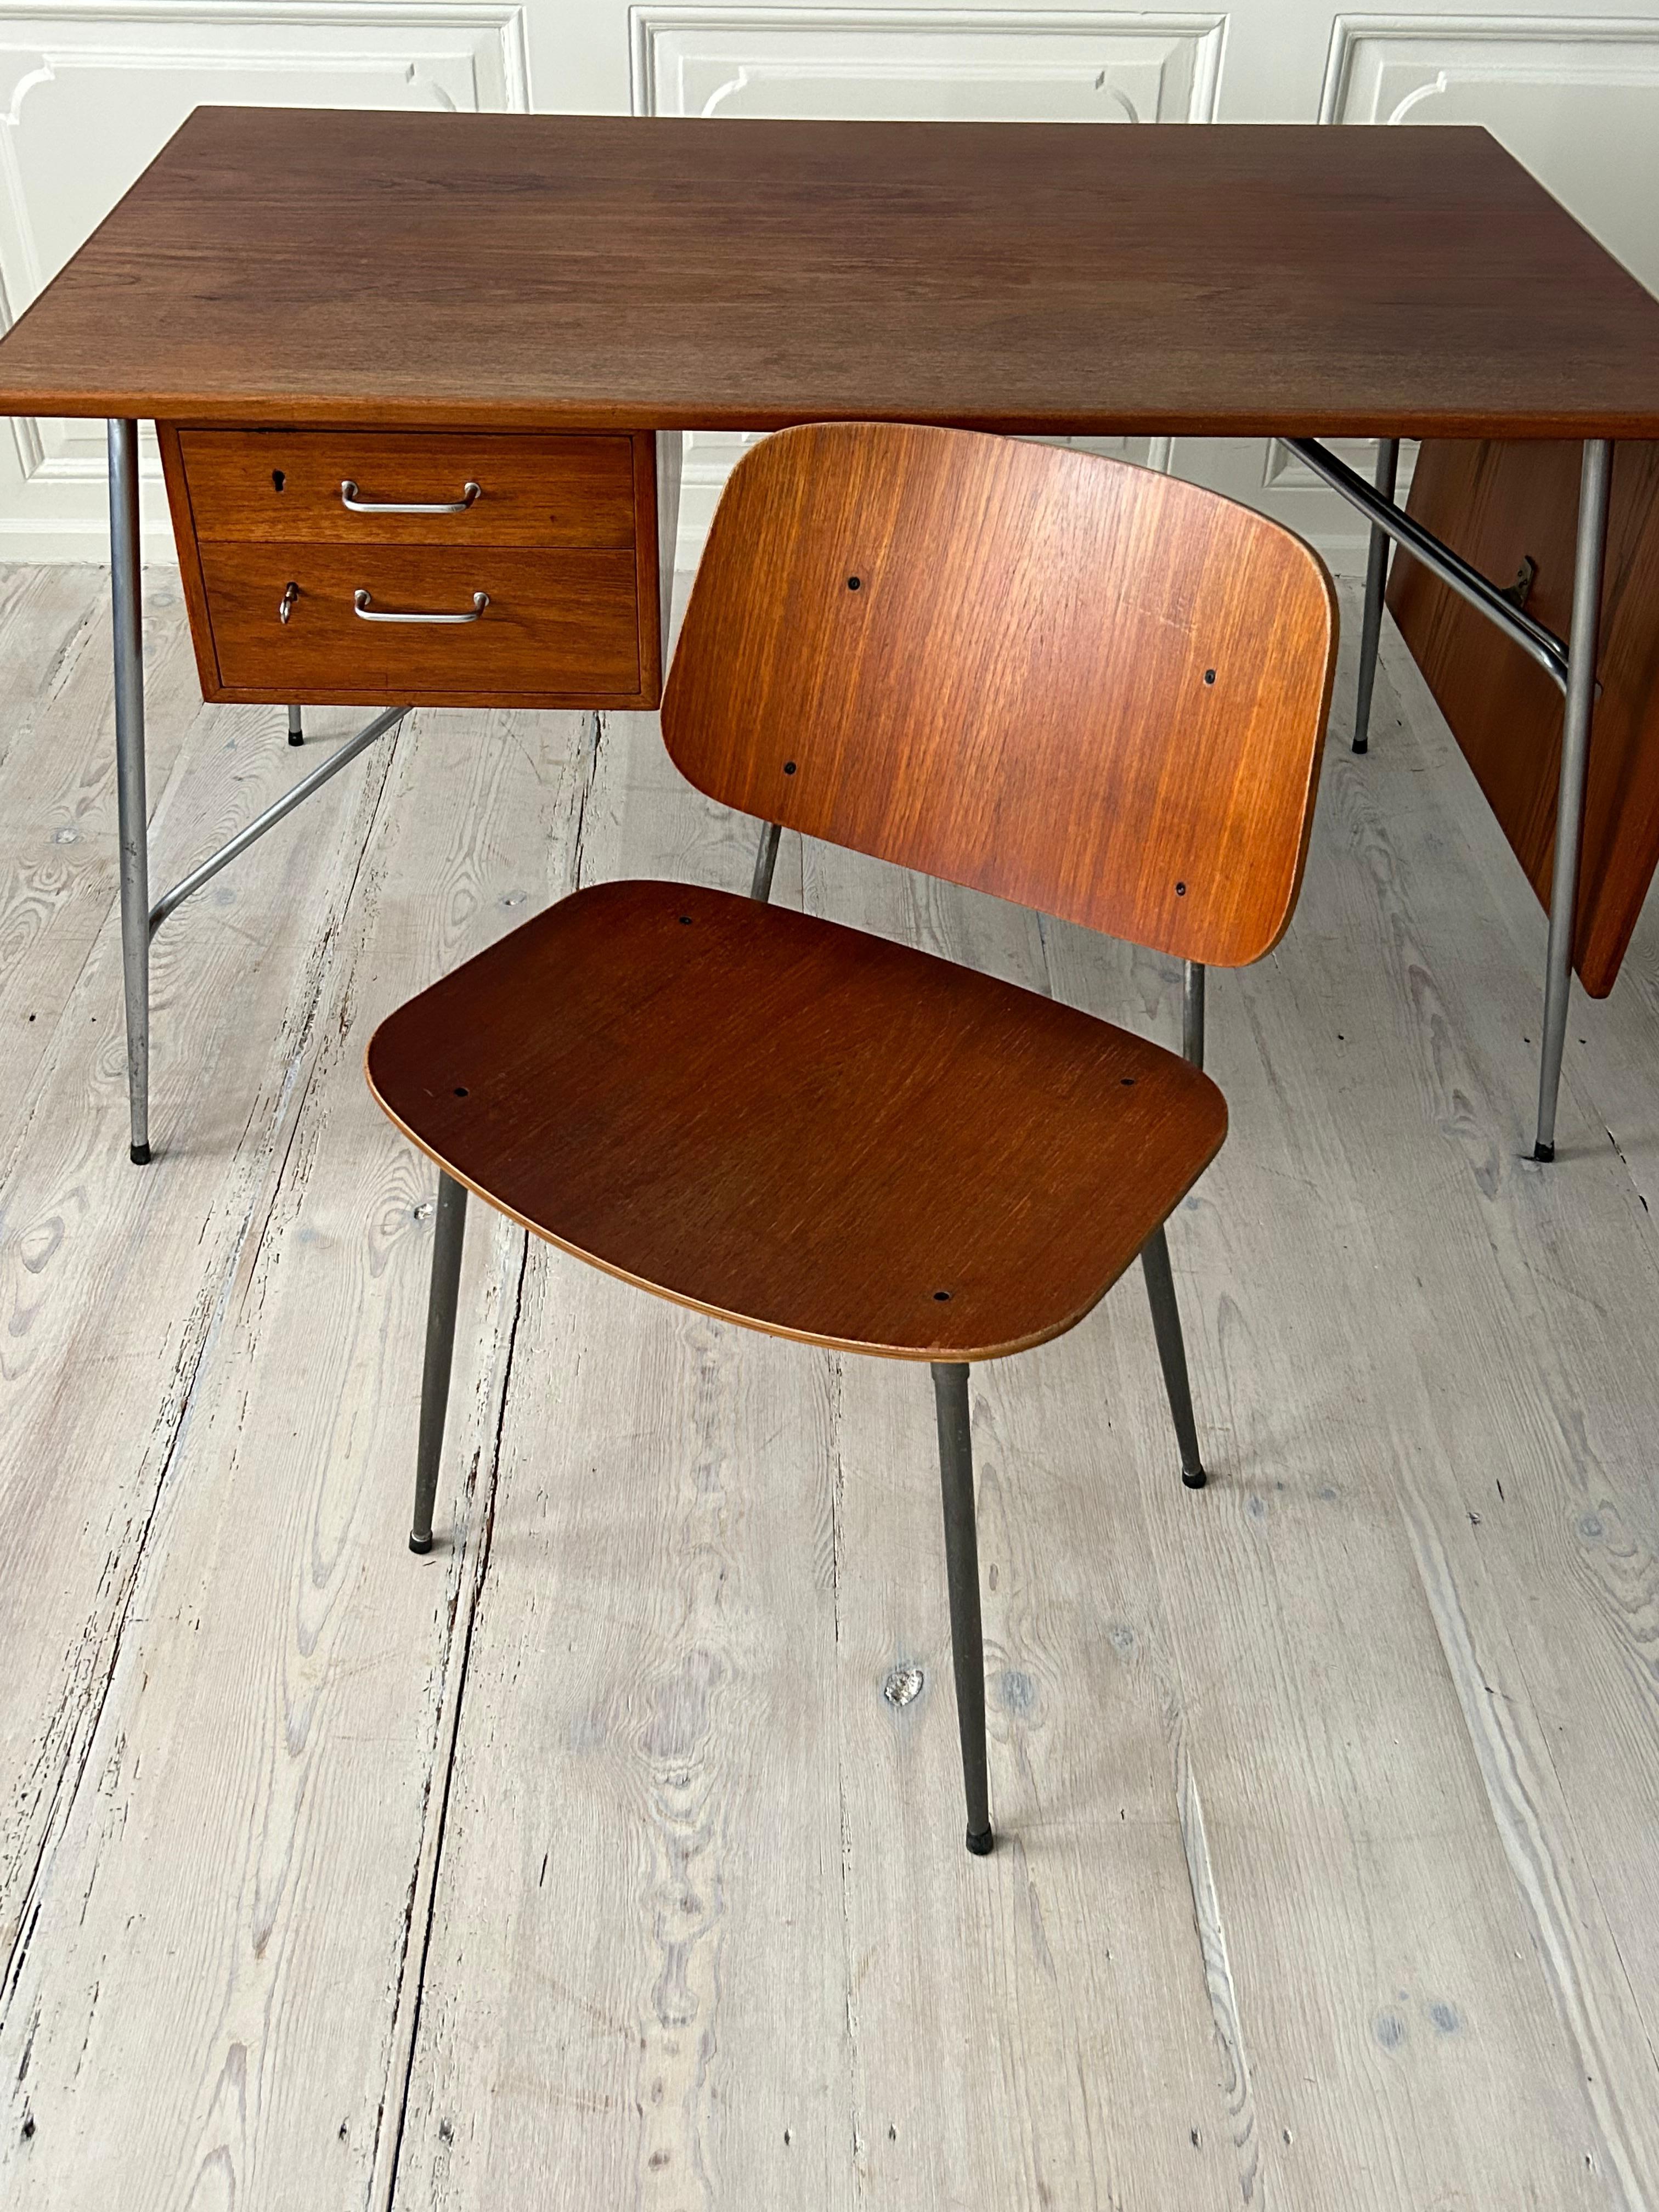 Vintage Børge Mogensen Desk and Chair in Teak and Steel, Denmark, 20th Century For Sale 5